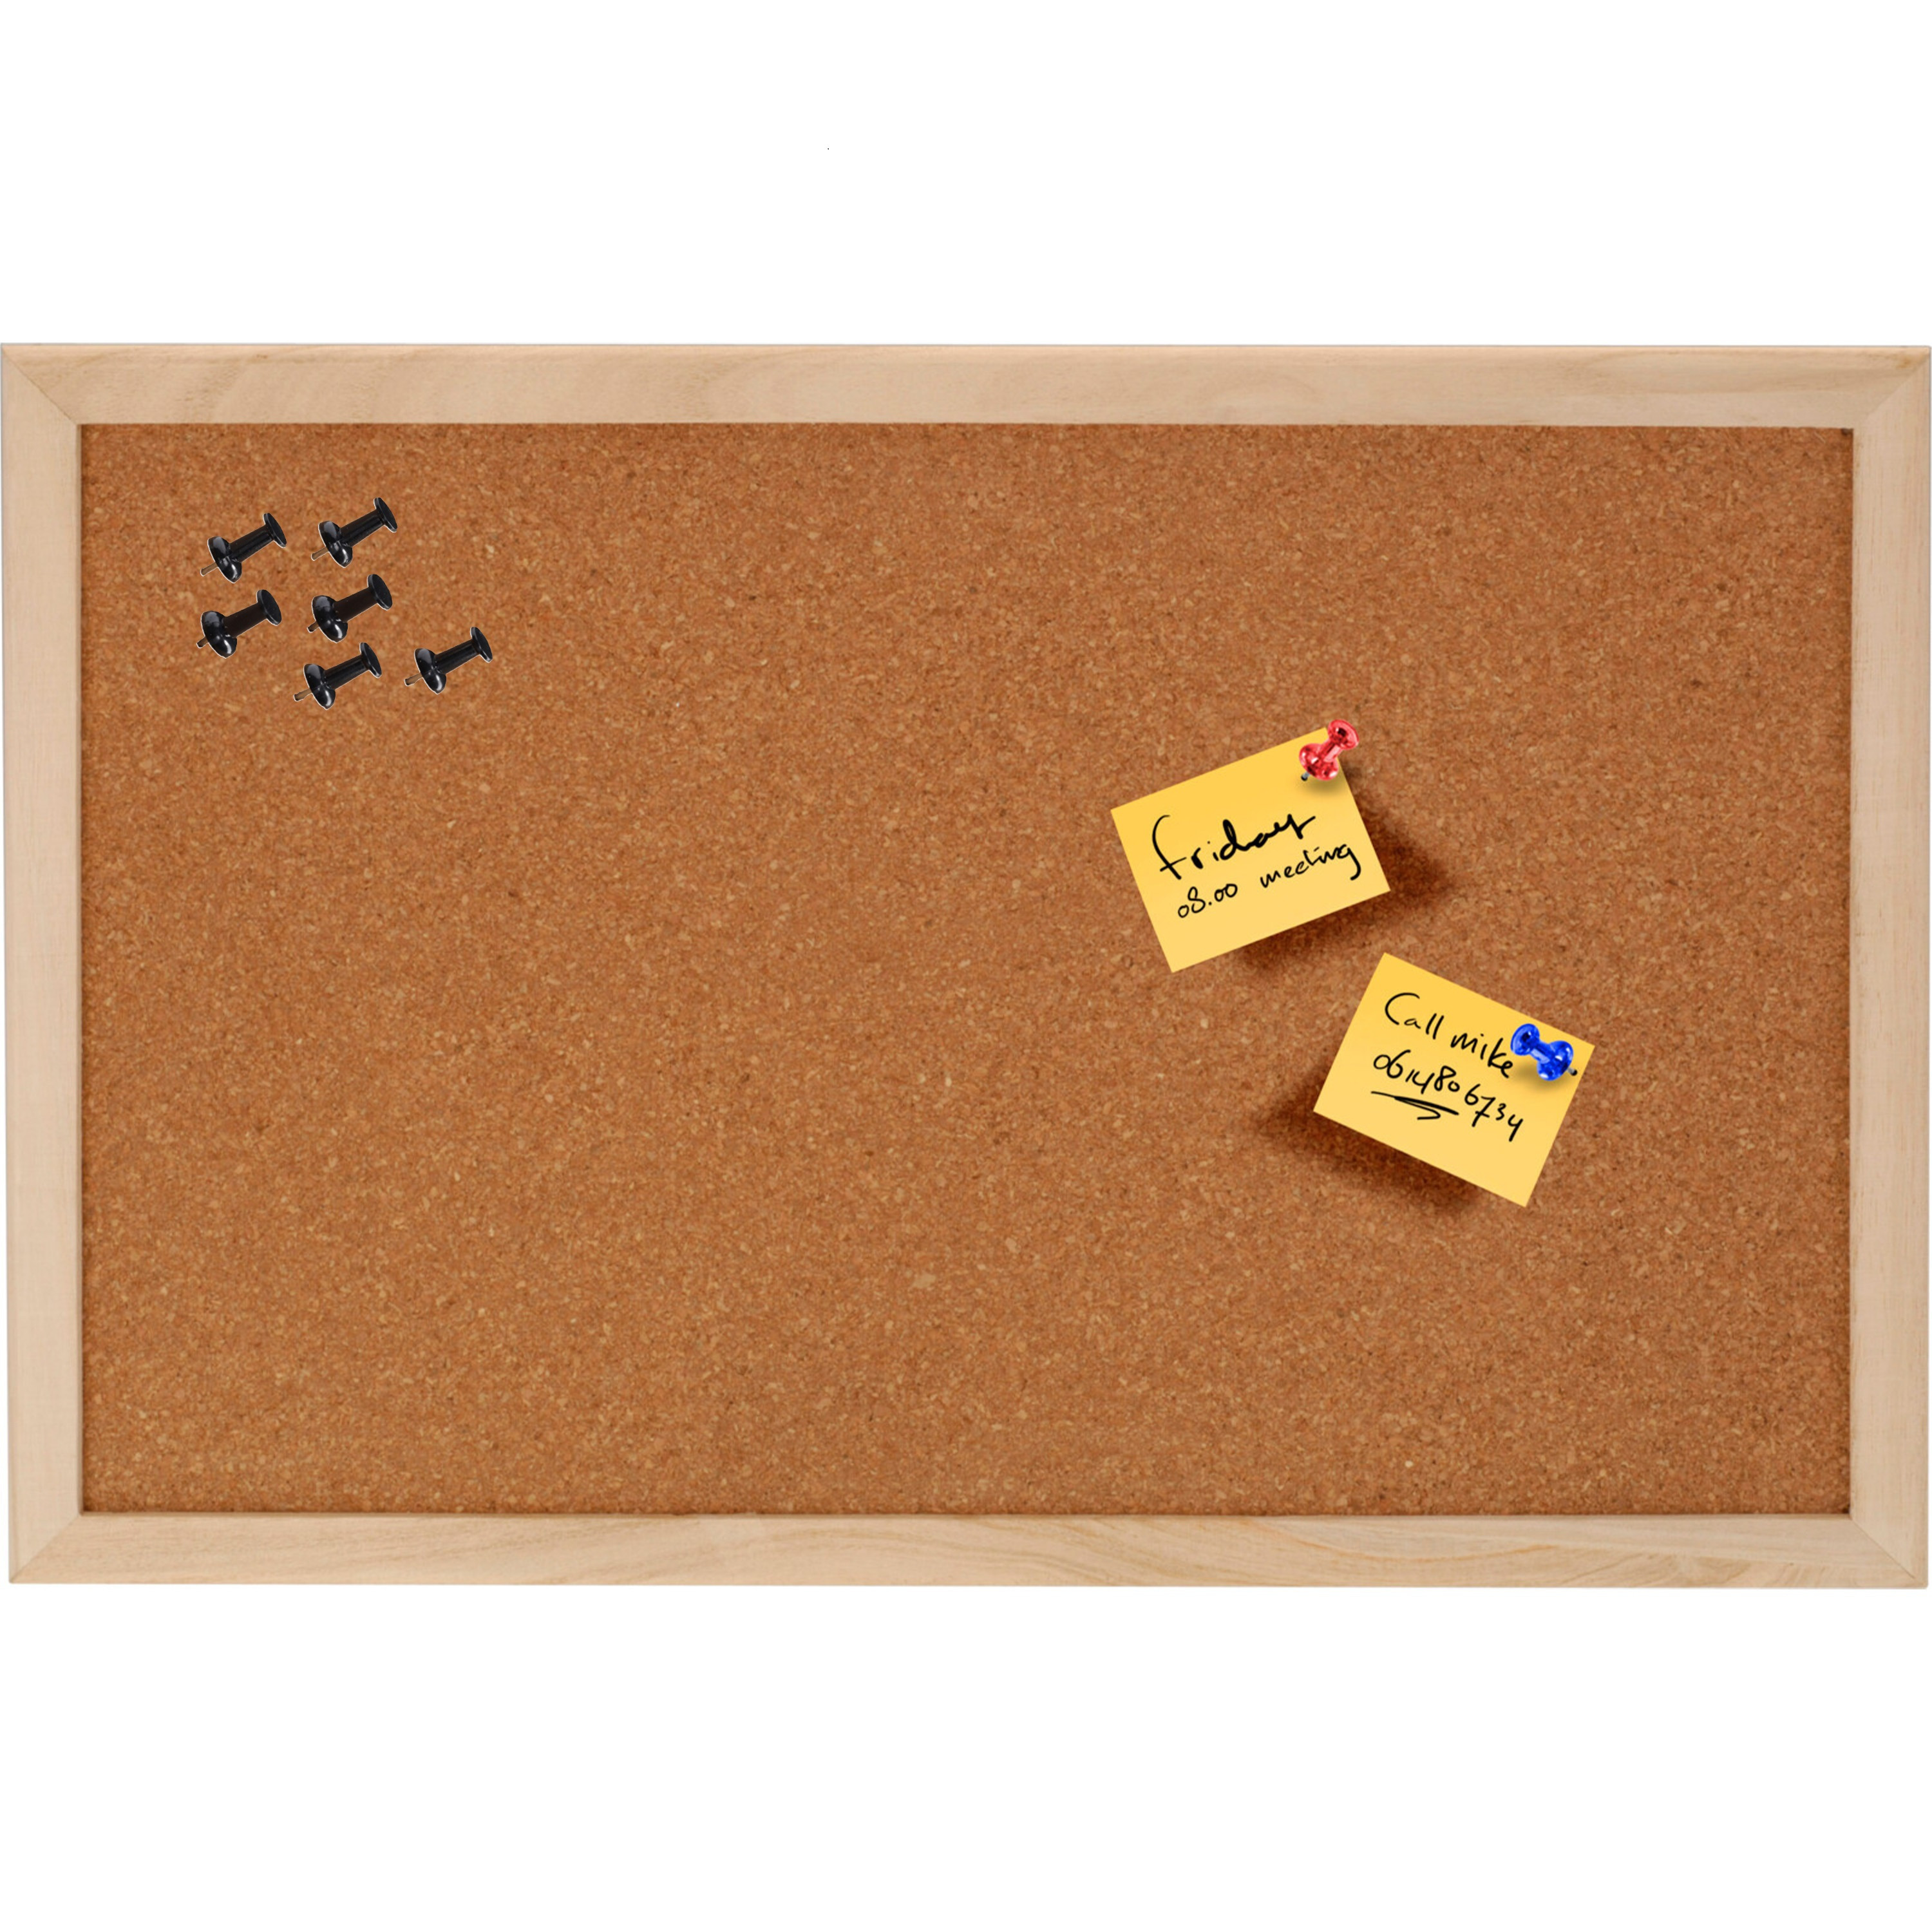 Prikbord van kurk 45 x 30 cm inclusief 25x zwarte punt punaises memobord